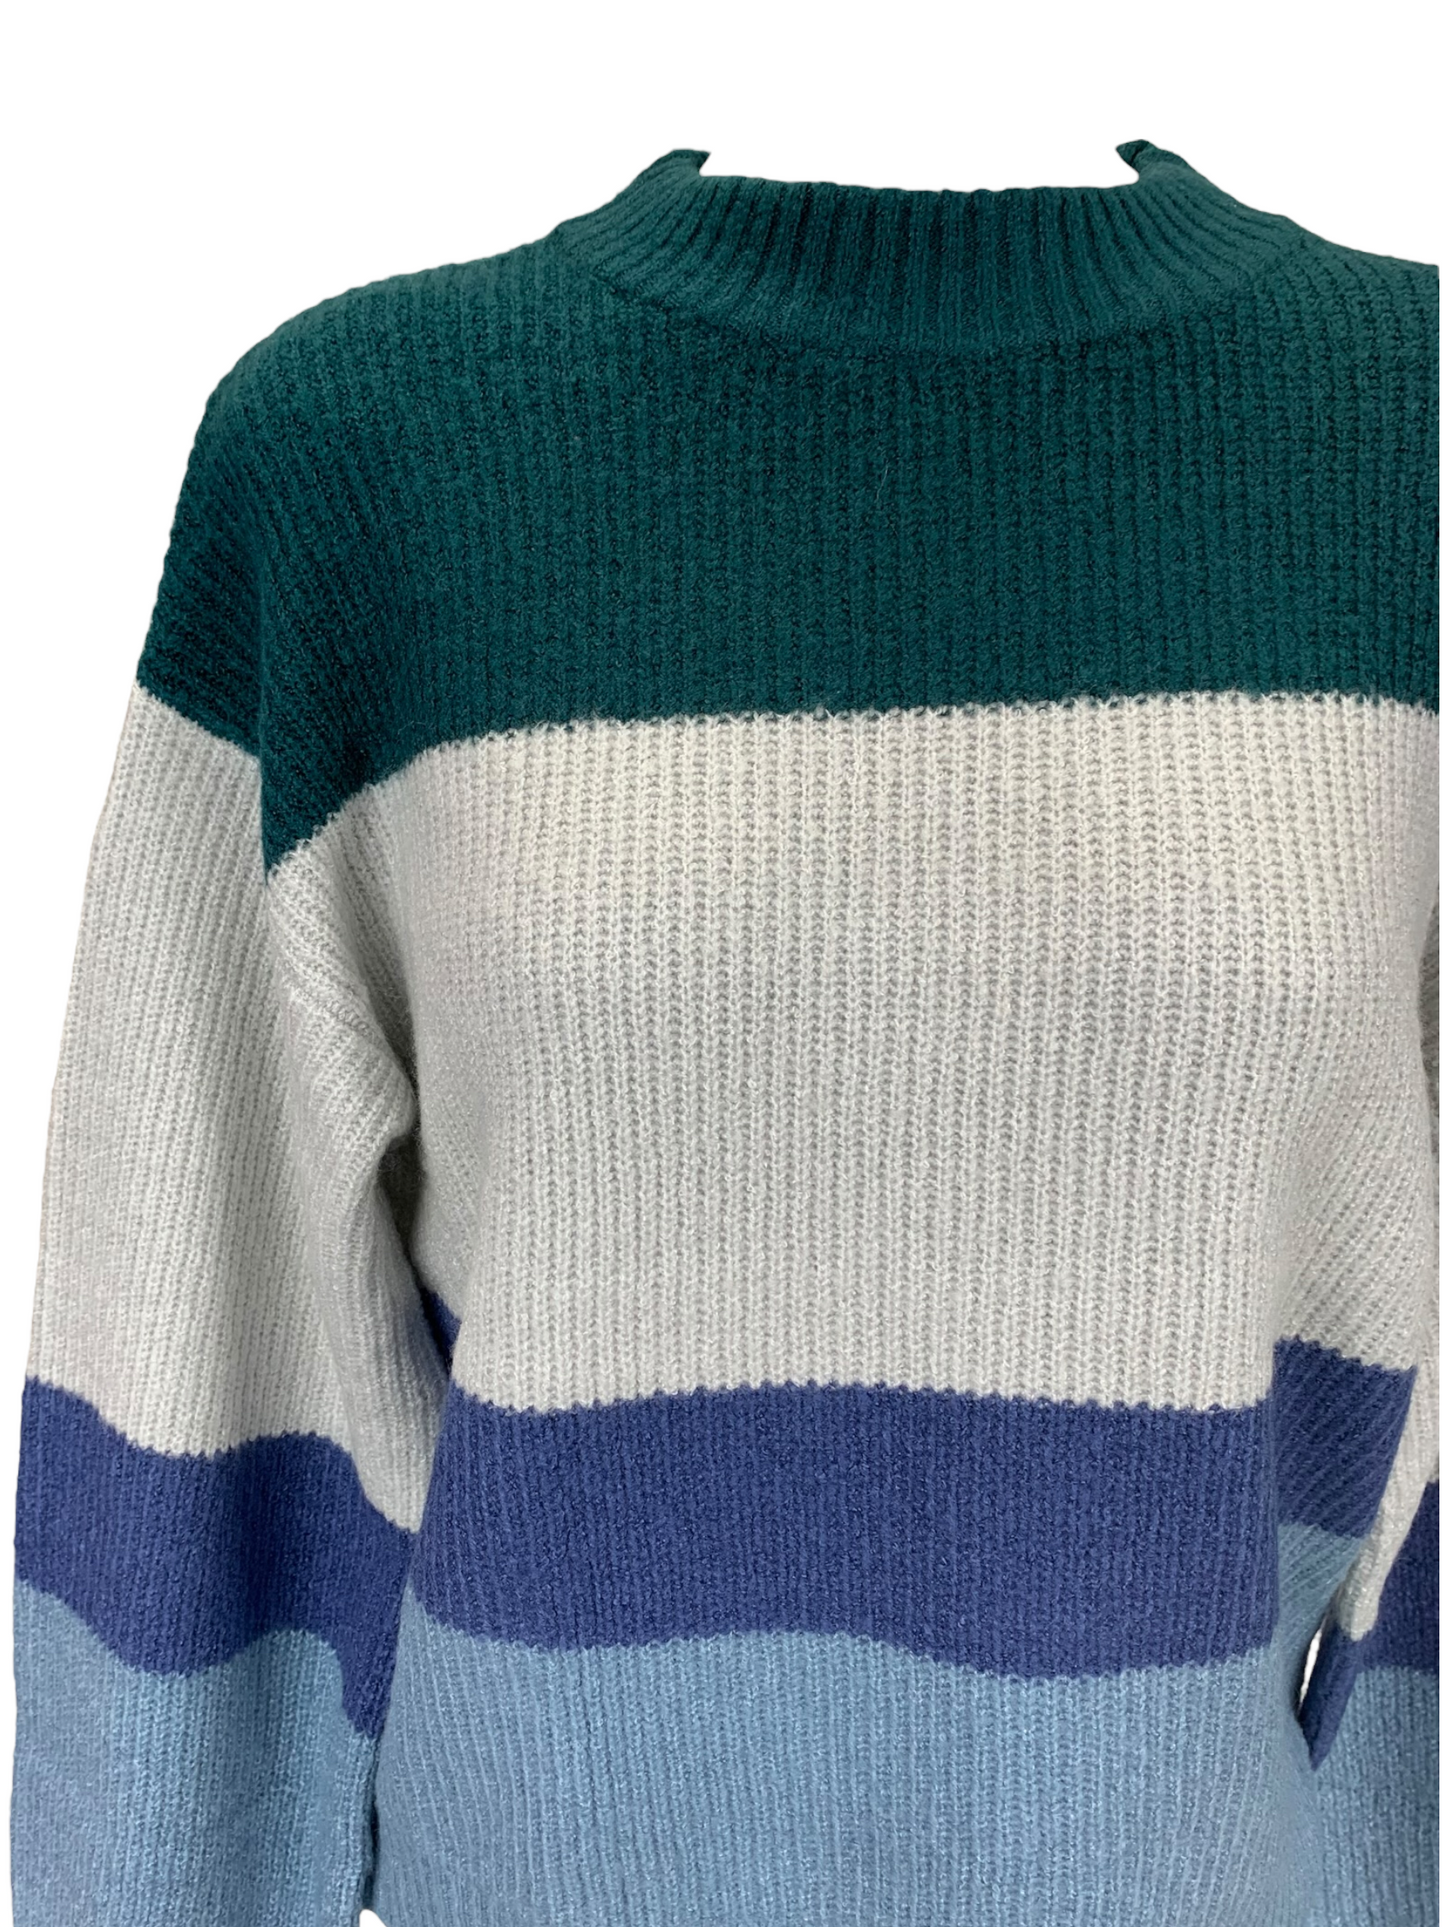 Women's Mandarine&Co green and blue sweater